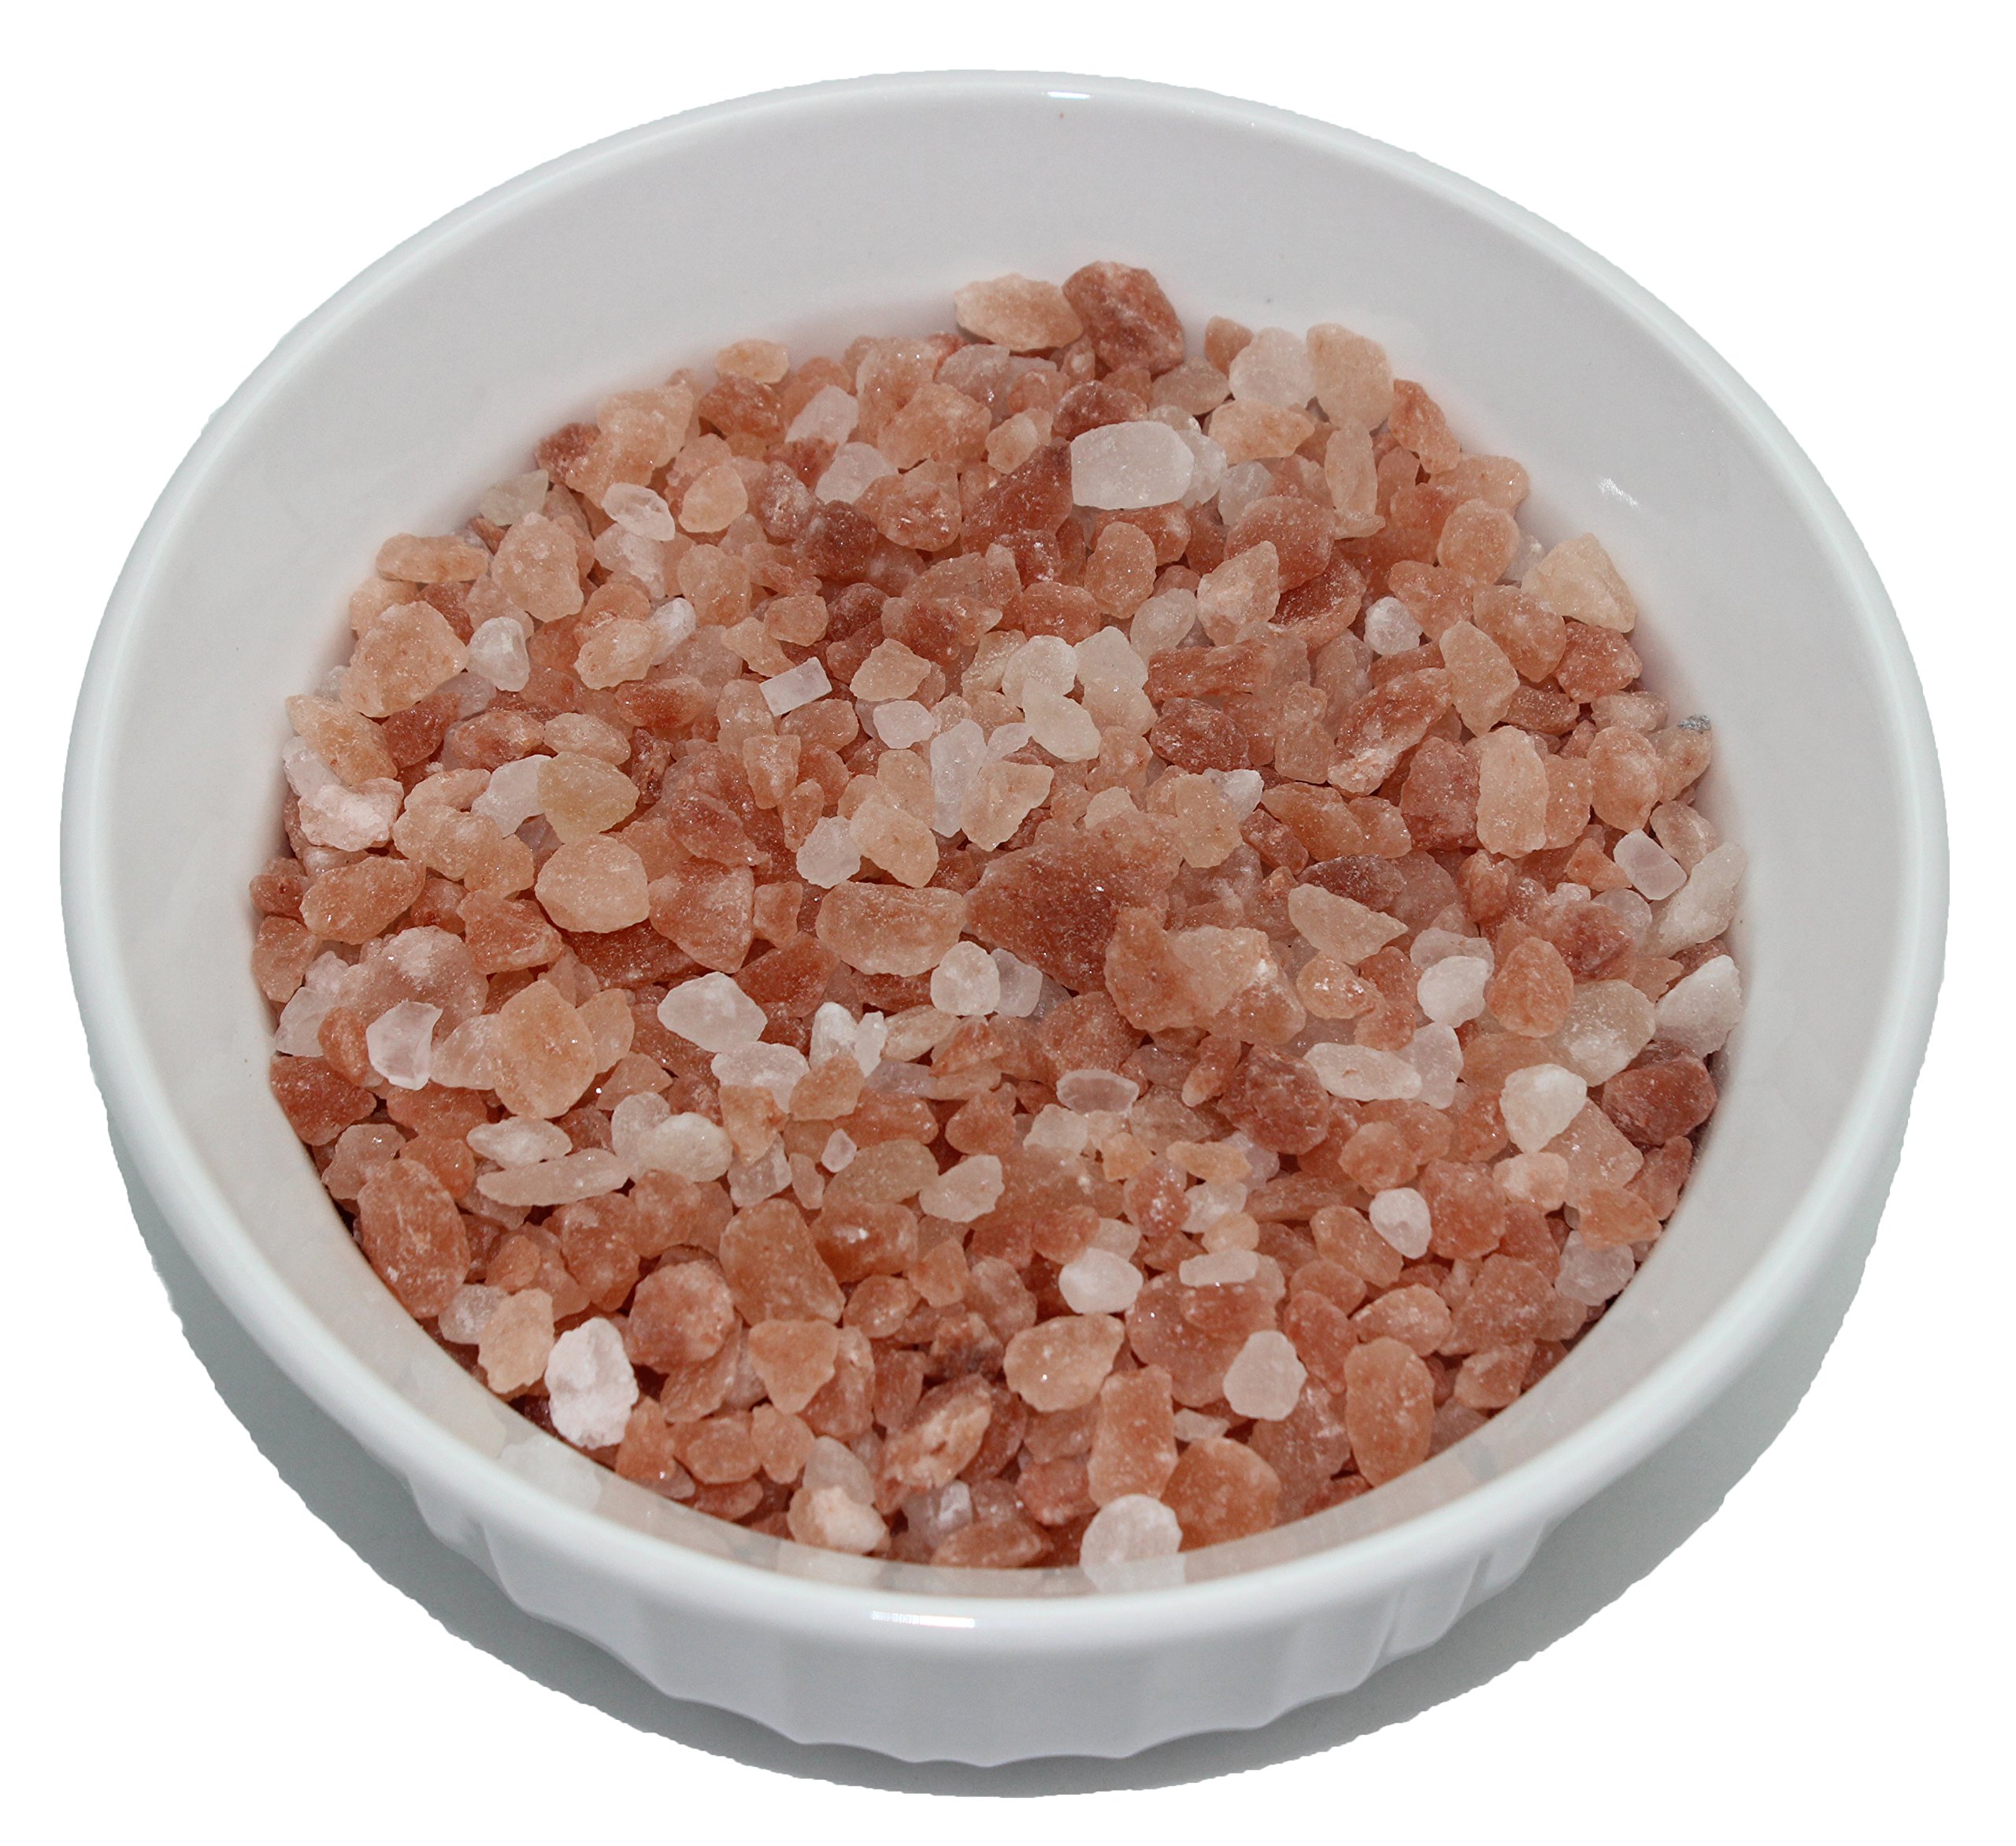 IndusClassic Himalayan Salt for Ceramic Inhaler or Neti Pot Refill Asthma Allergy Sinus - 2 lbs